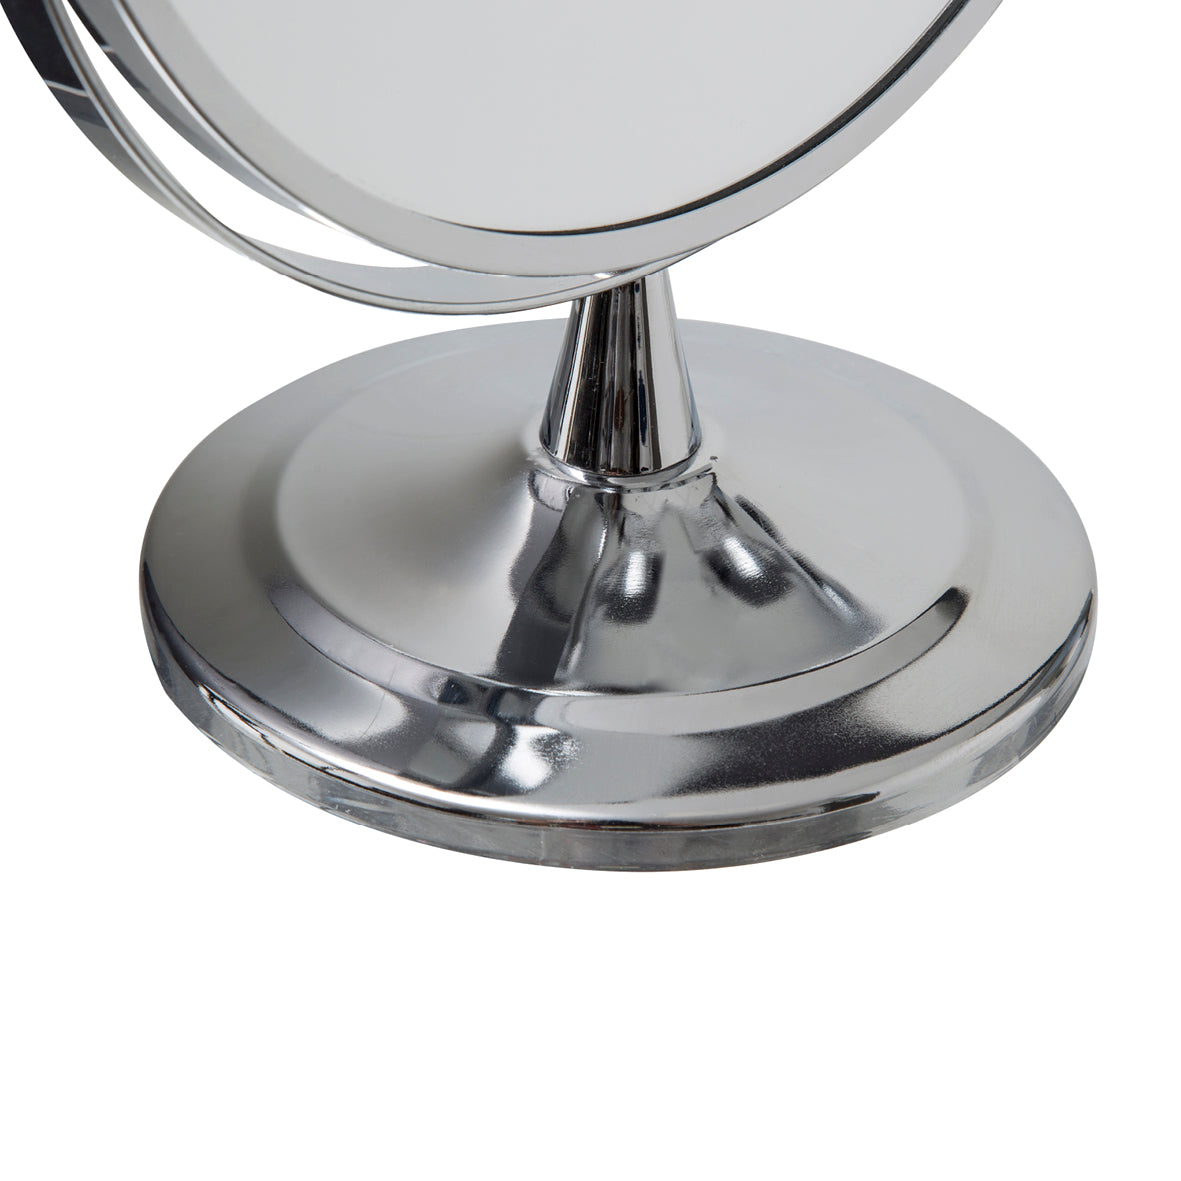 Make-up mirror Grey D. 17 x 23.2 cm